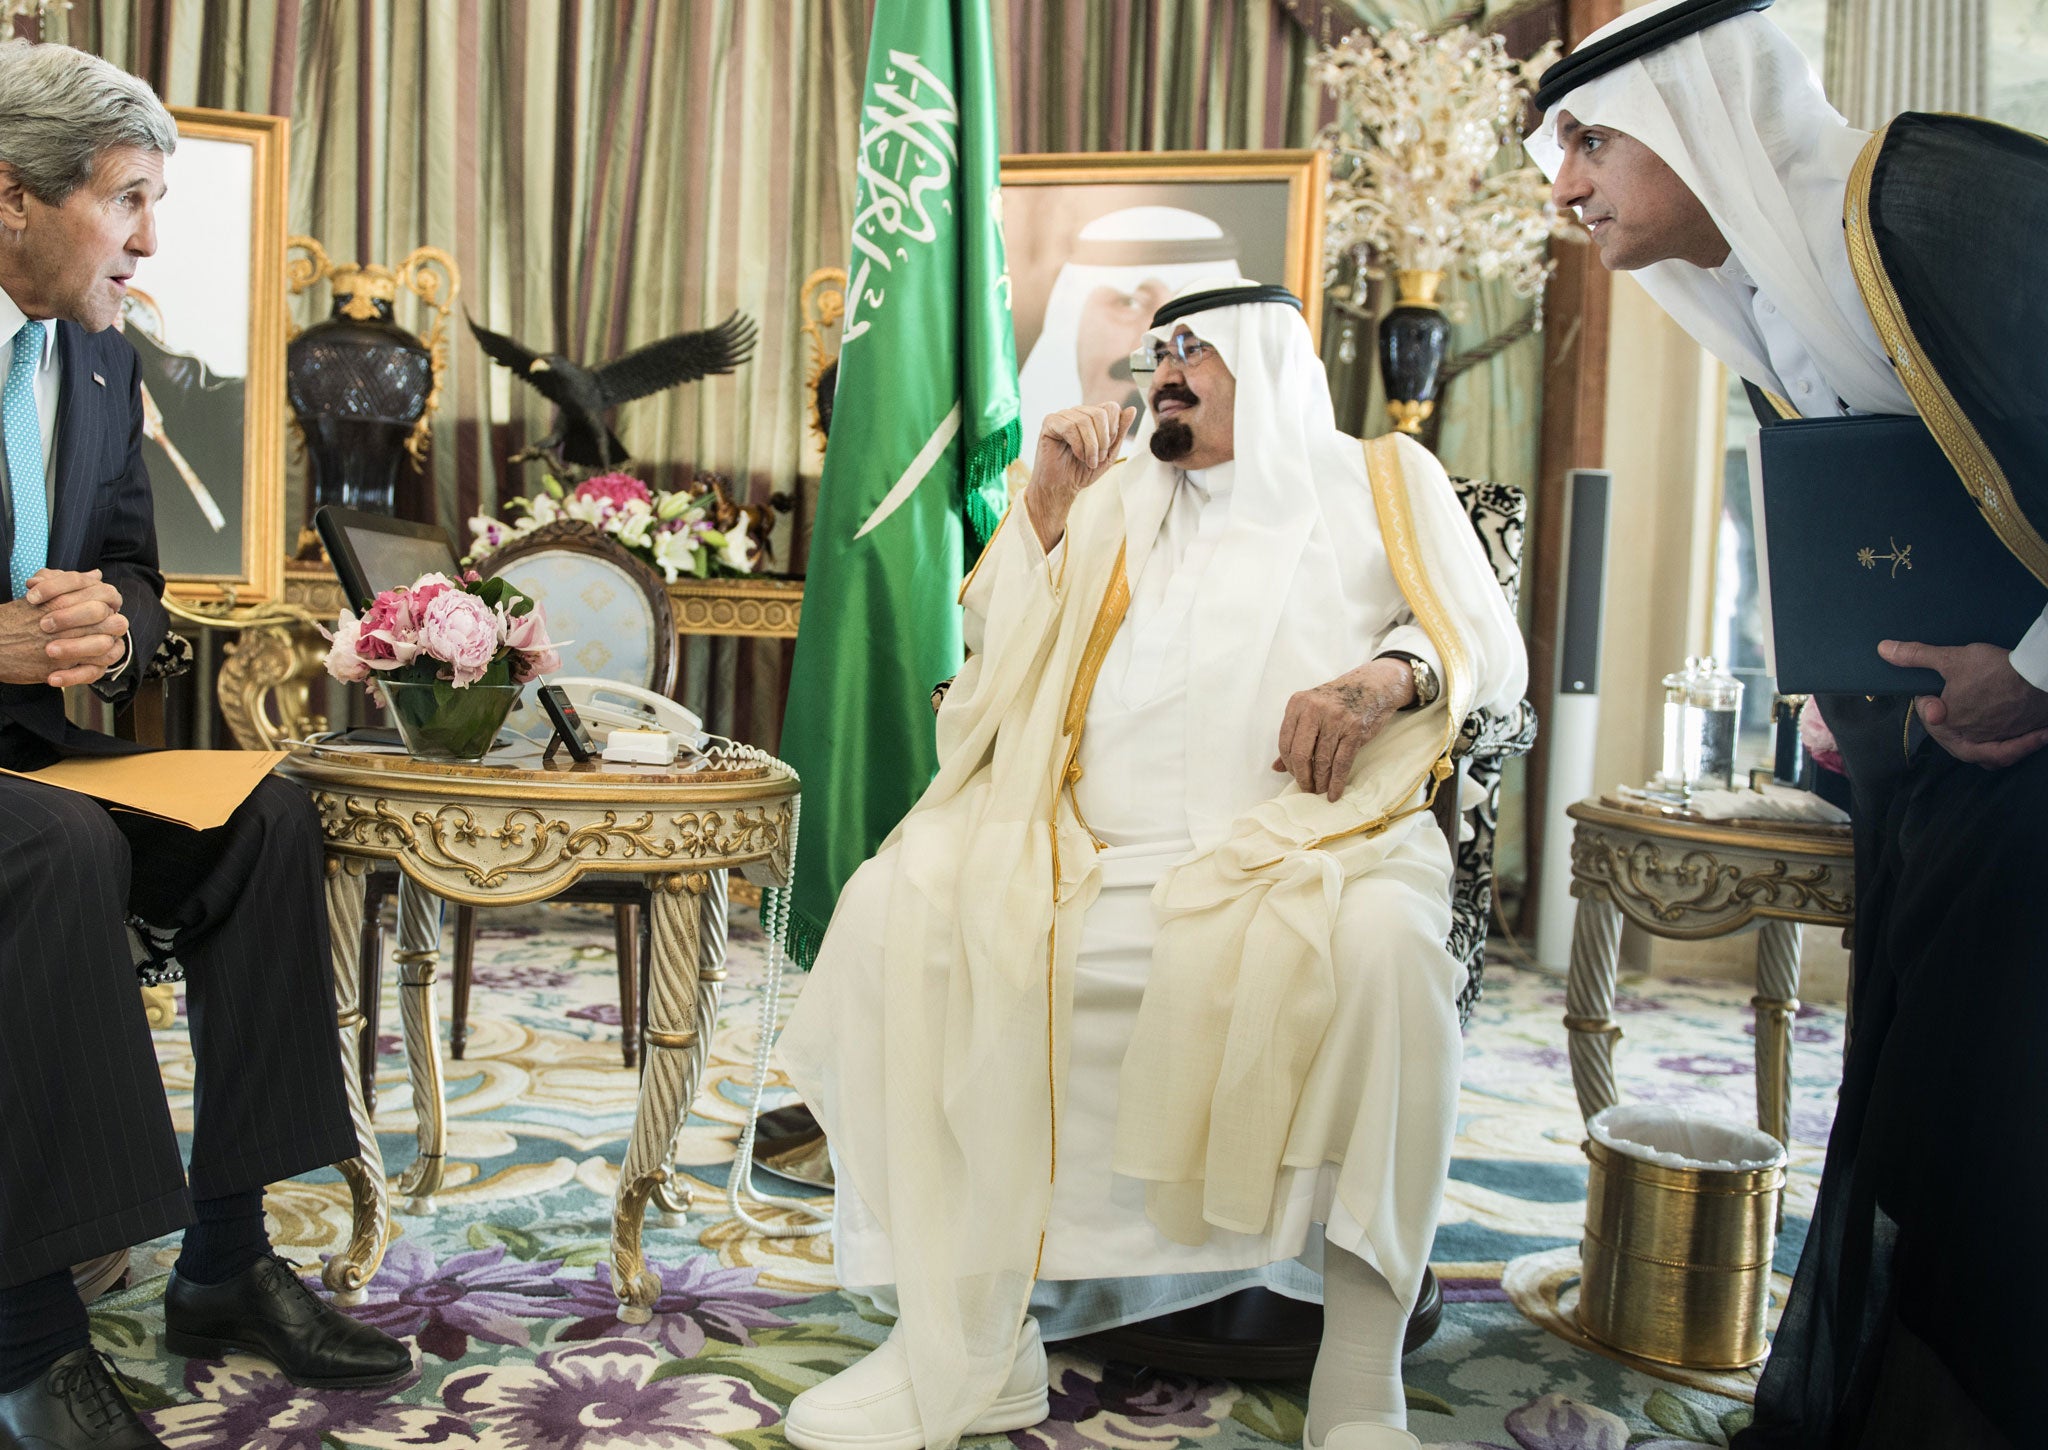 Saidi ambassador to the US Adel al-Jubeir (R) listens to US Secretary of State John Kerry (L) while interpreting for King Abdullah bin Abdulaziz Al-Saud before meeting at the King's private residence